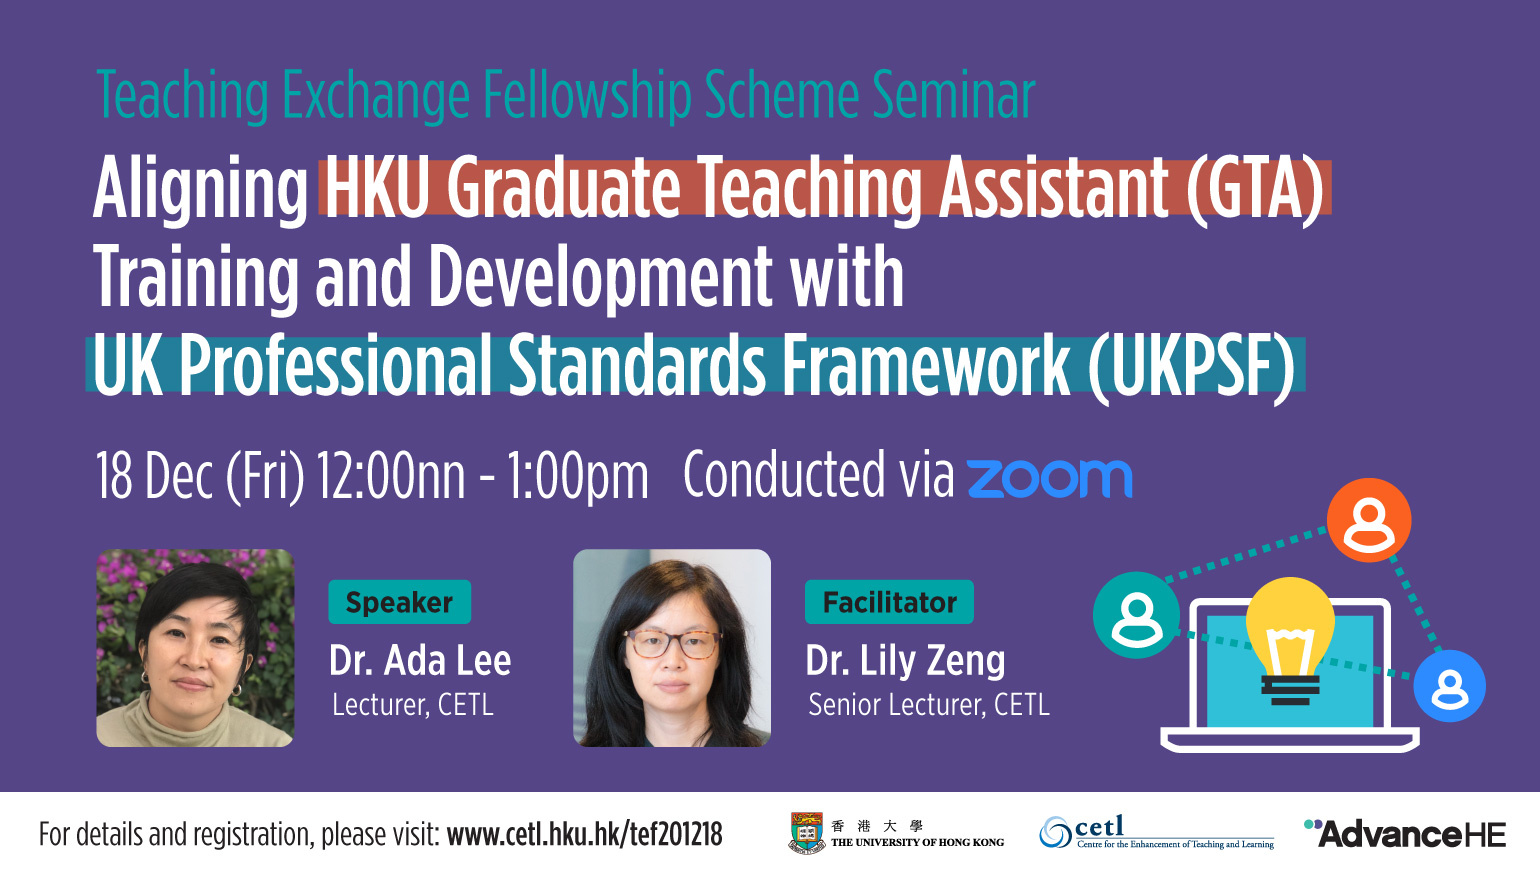 Teaching Exchange Fellowship Scheme Seminar (Dec 18, 12-1pm)